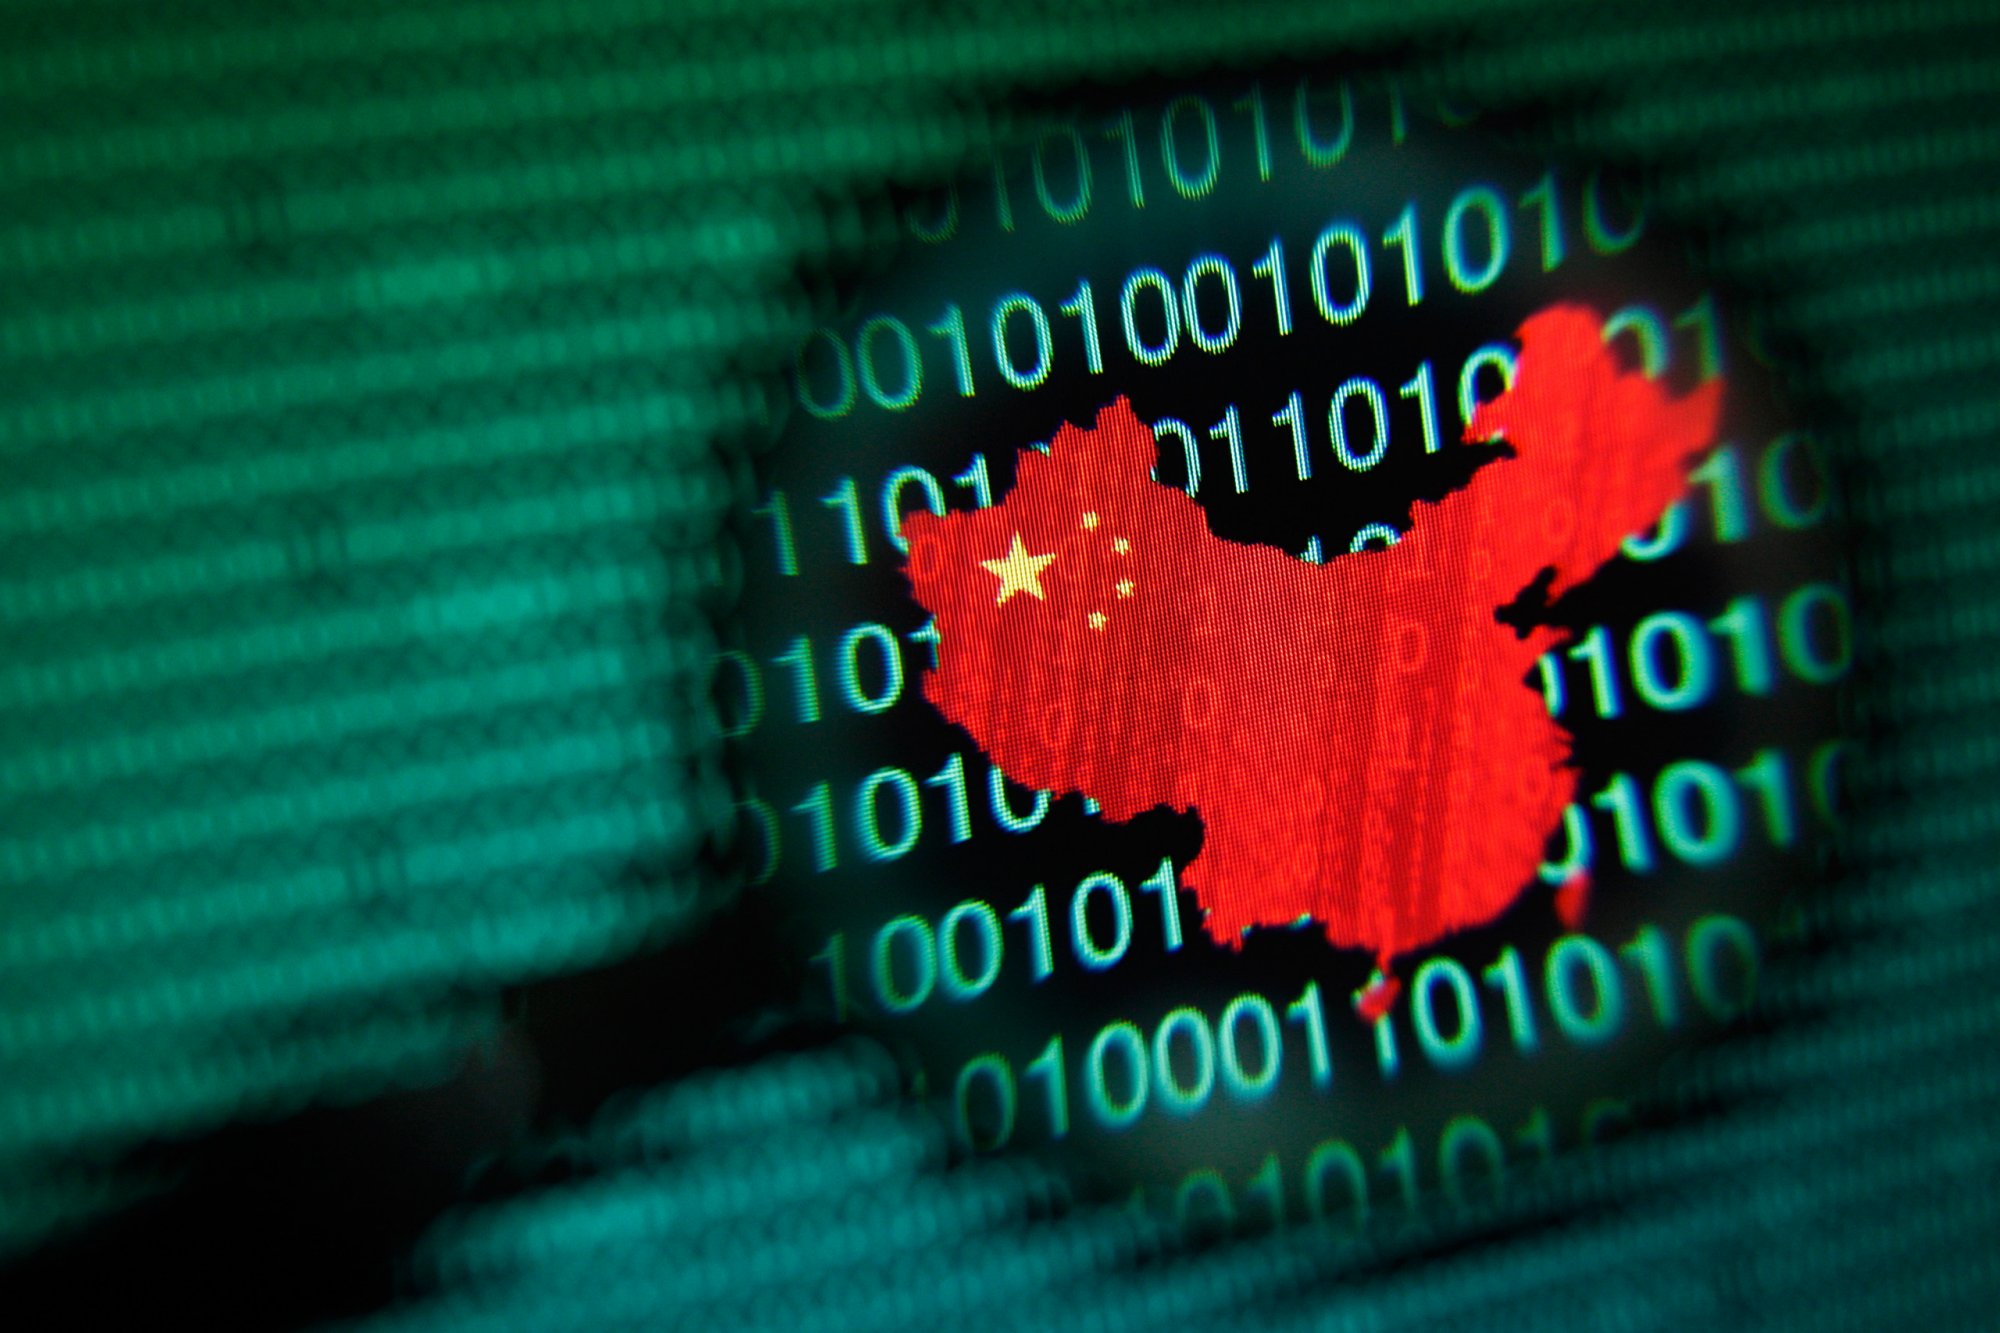 china-cyberattack-hacking